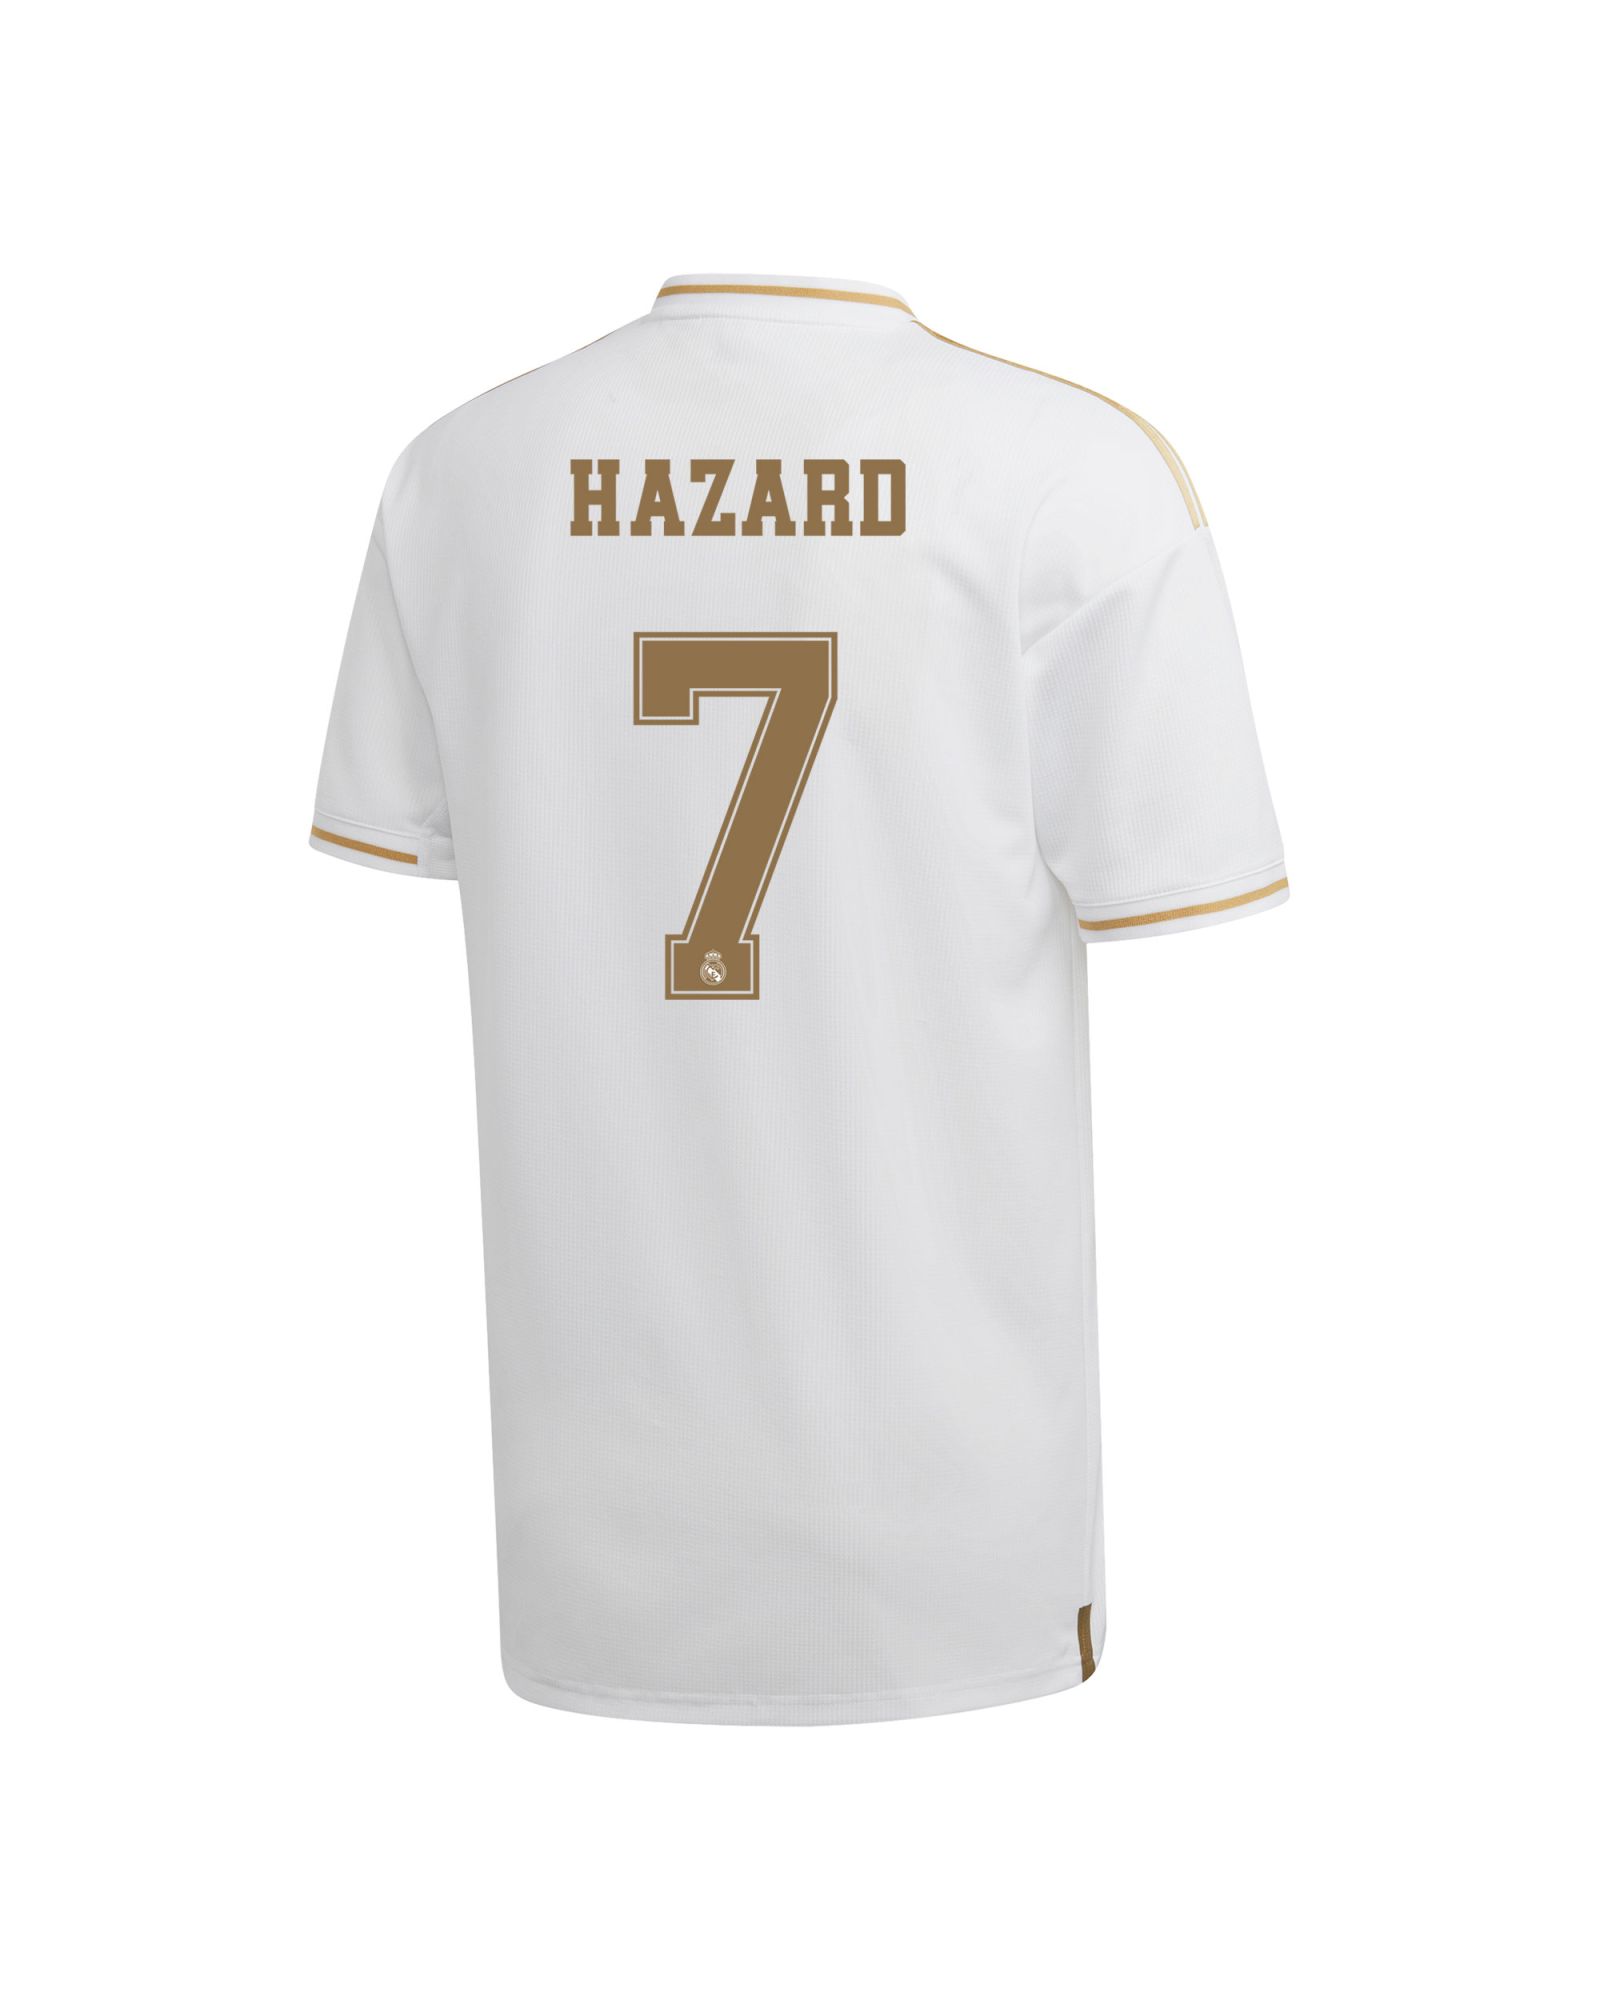 Camiseta 1ª Real Madrid 2019/2020  Hazard - Fútbol Factory